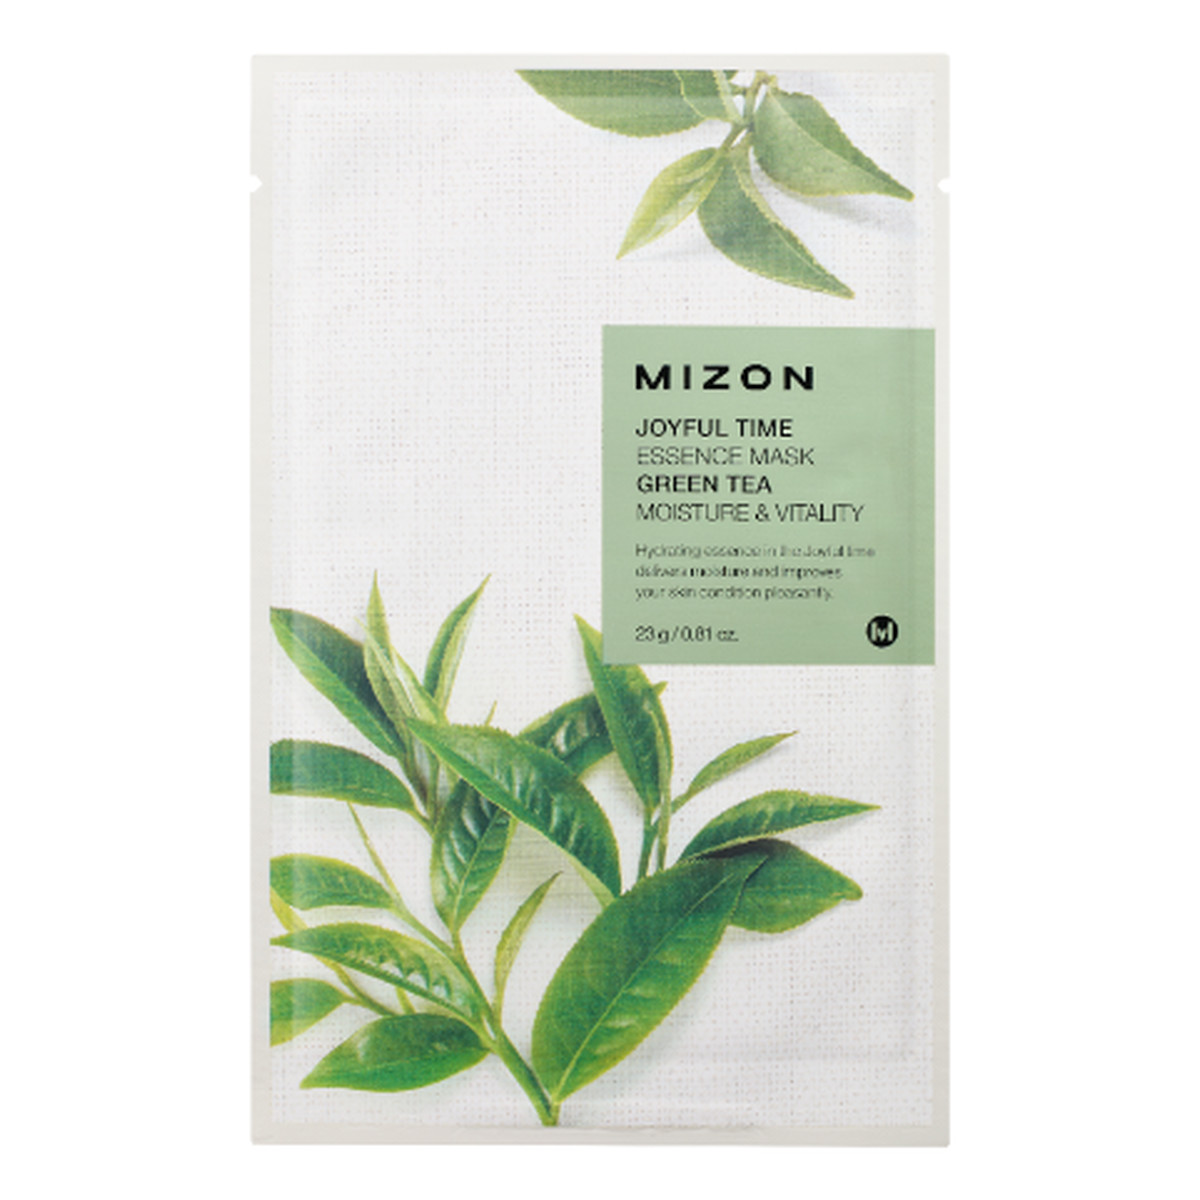 Mizon Joyful Time Essence Maska na płacie bawełny Green Tea 23g